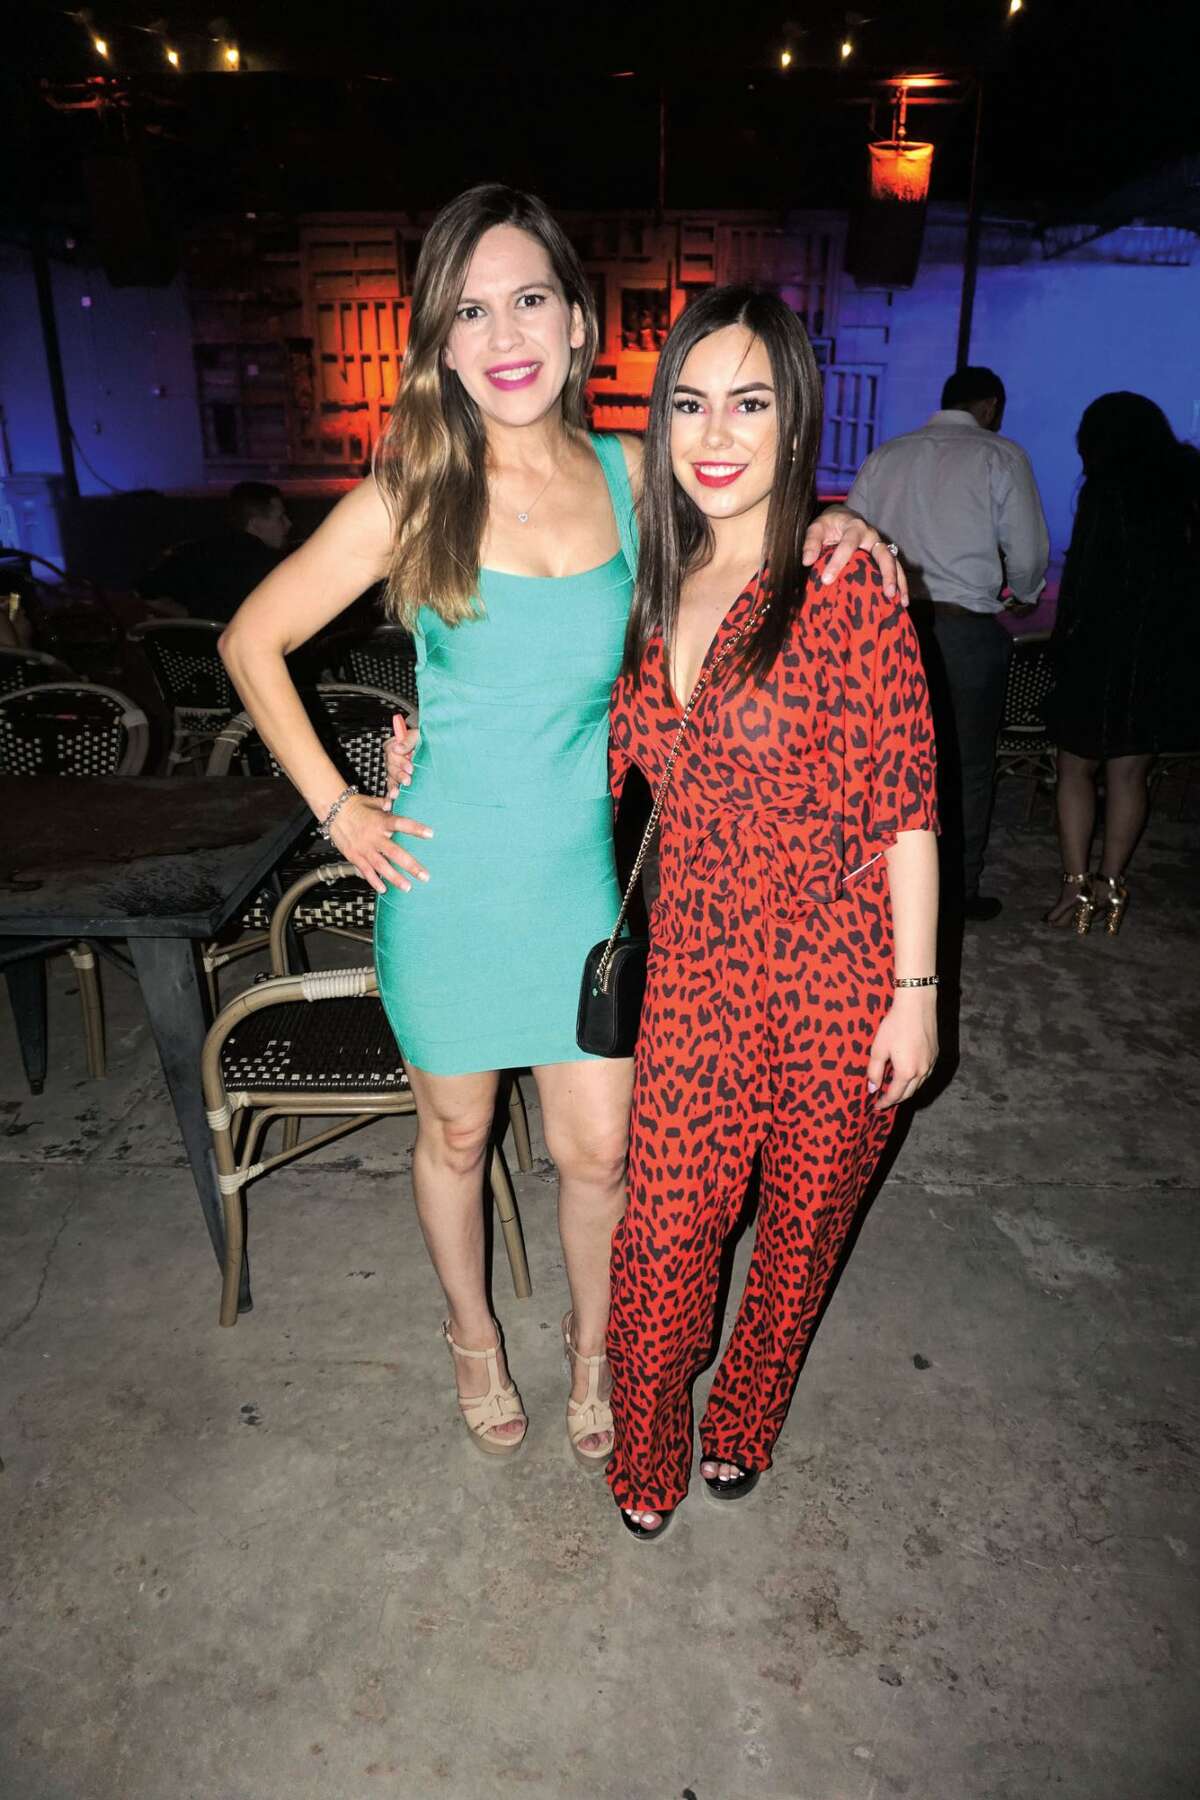 Maritza Garcia and Kristen Davila at Siete Banderas